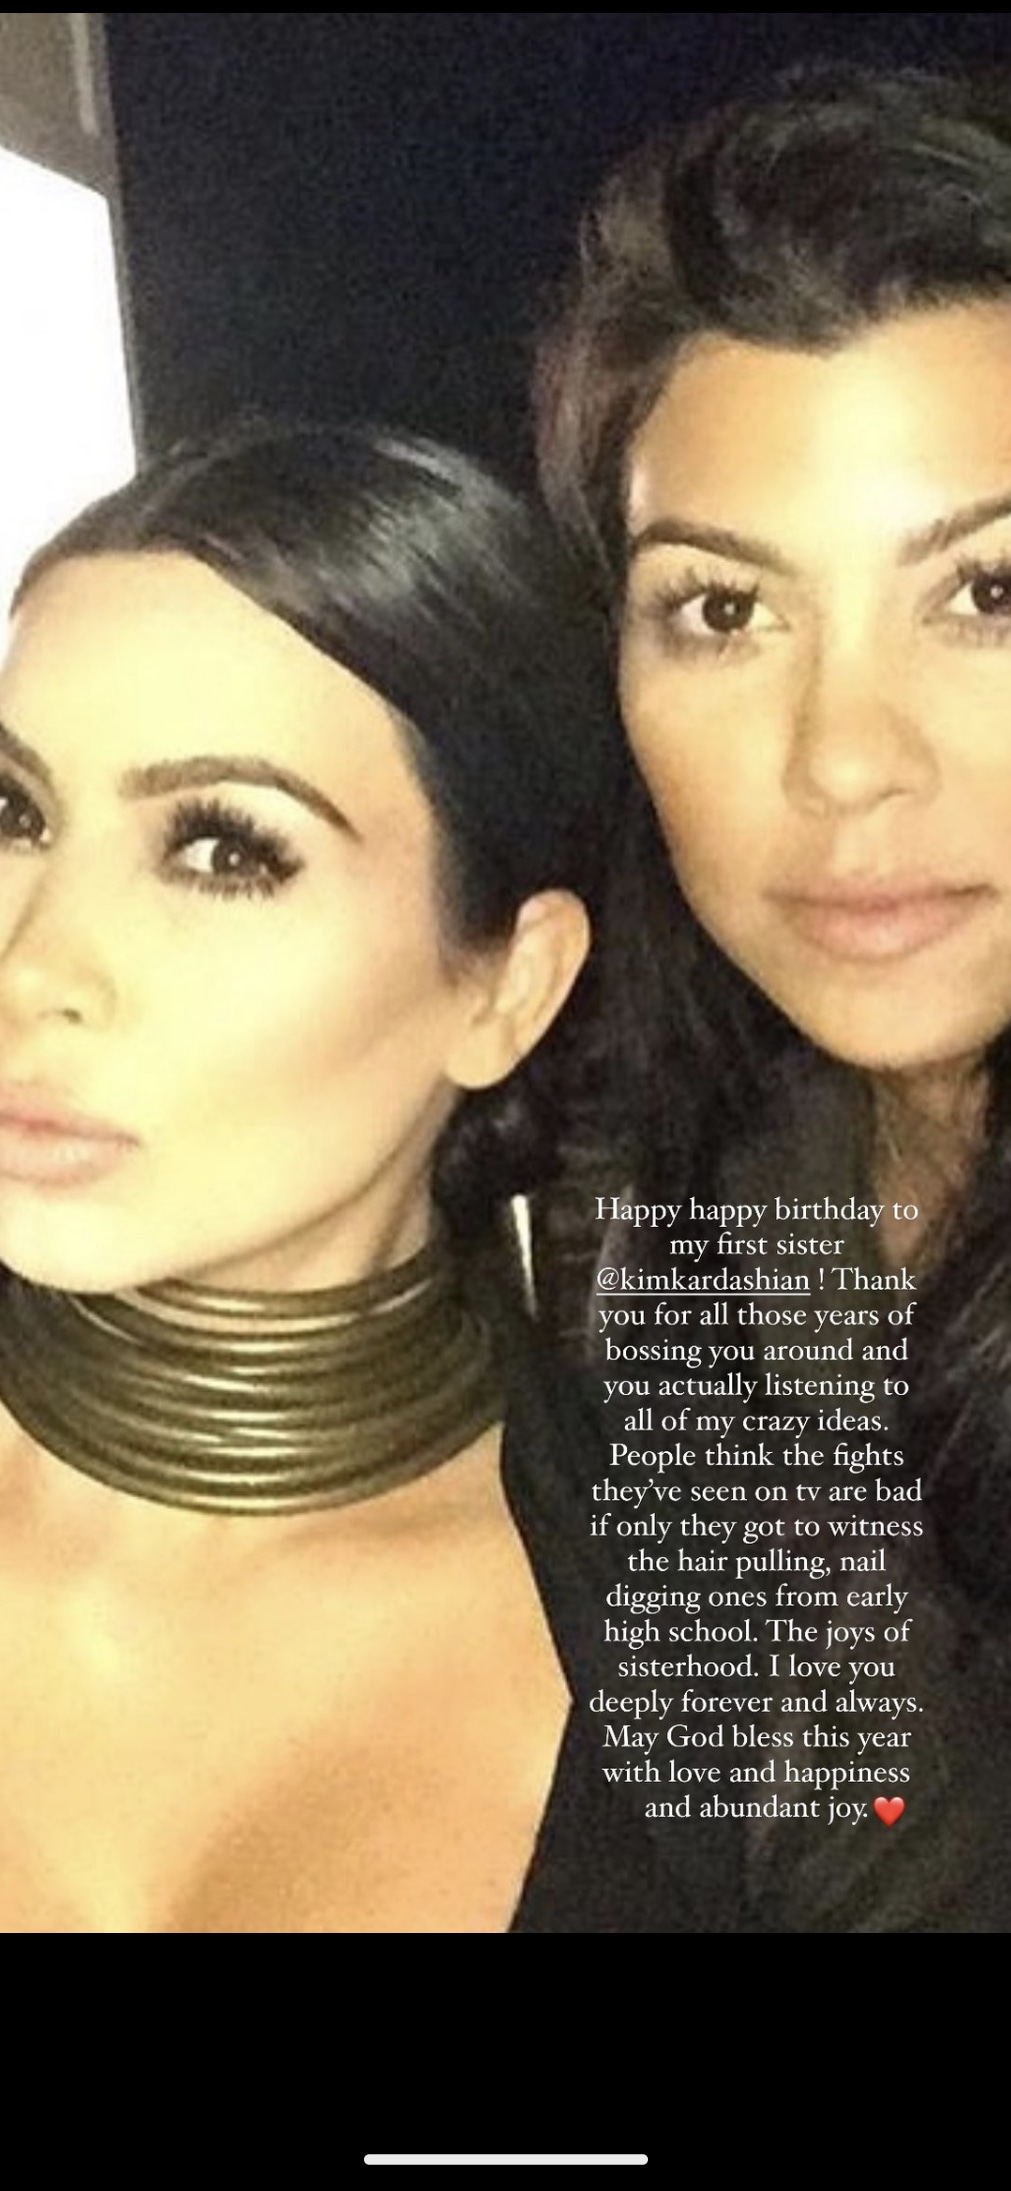 Kourtney Kardashian opened up about her relationship with Kim Kardashian today